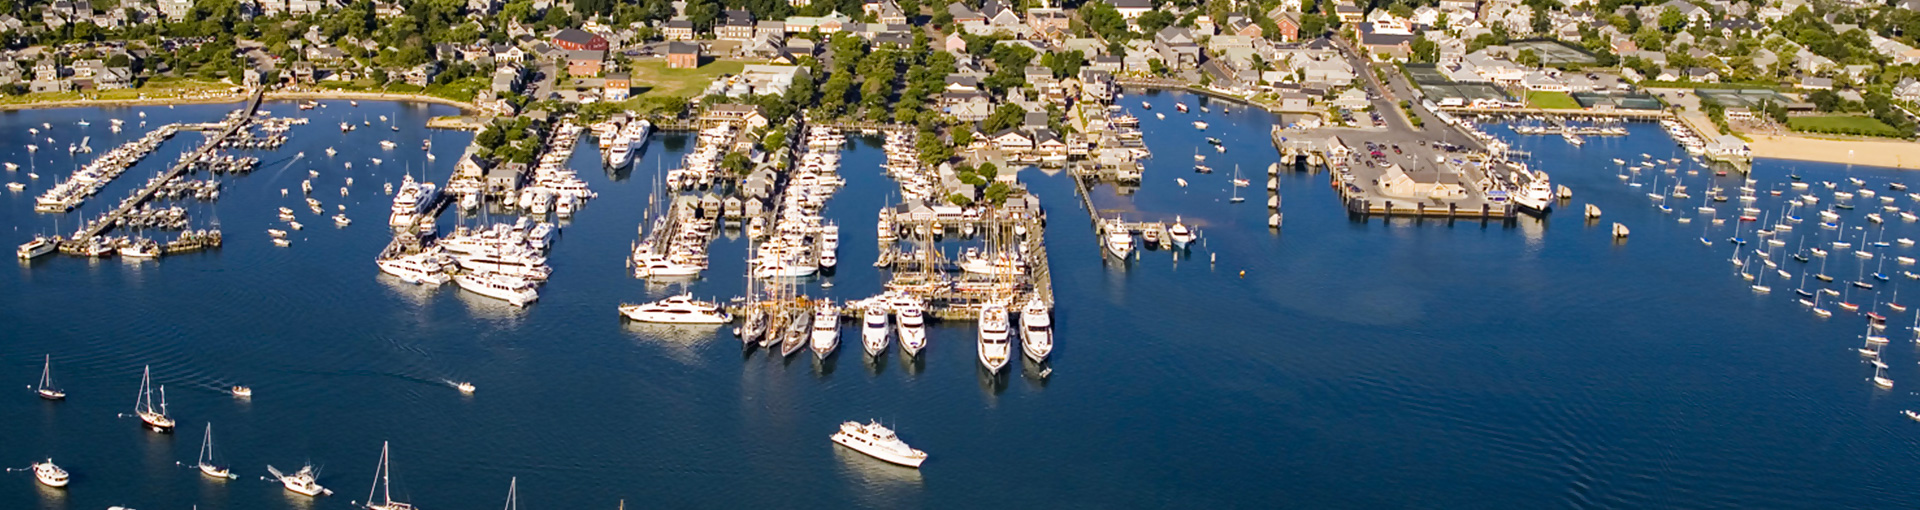 Nantucket Island, Massachusetts Marina